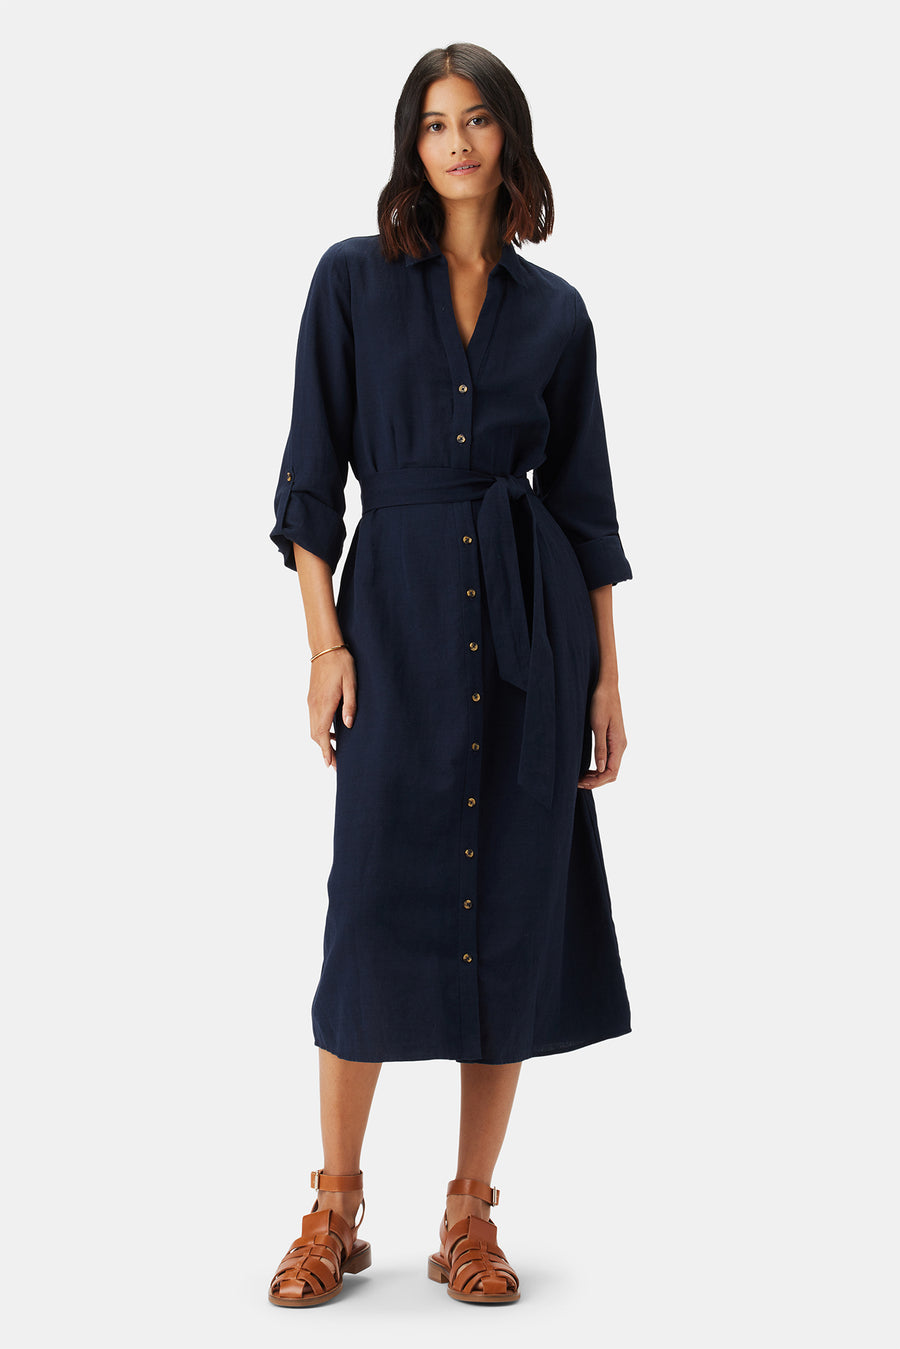 Joyce Cotton Linen Dress - Navy Blue